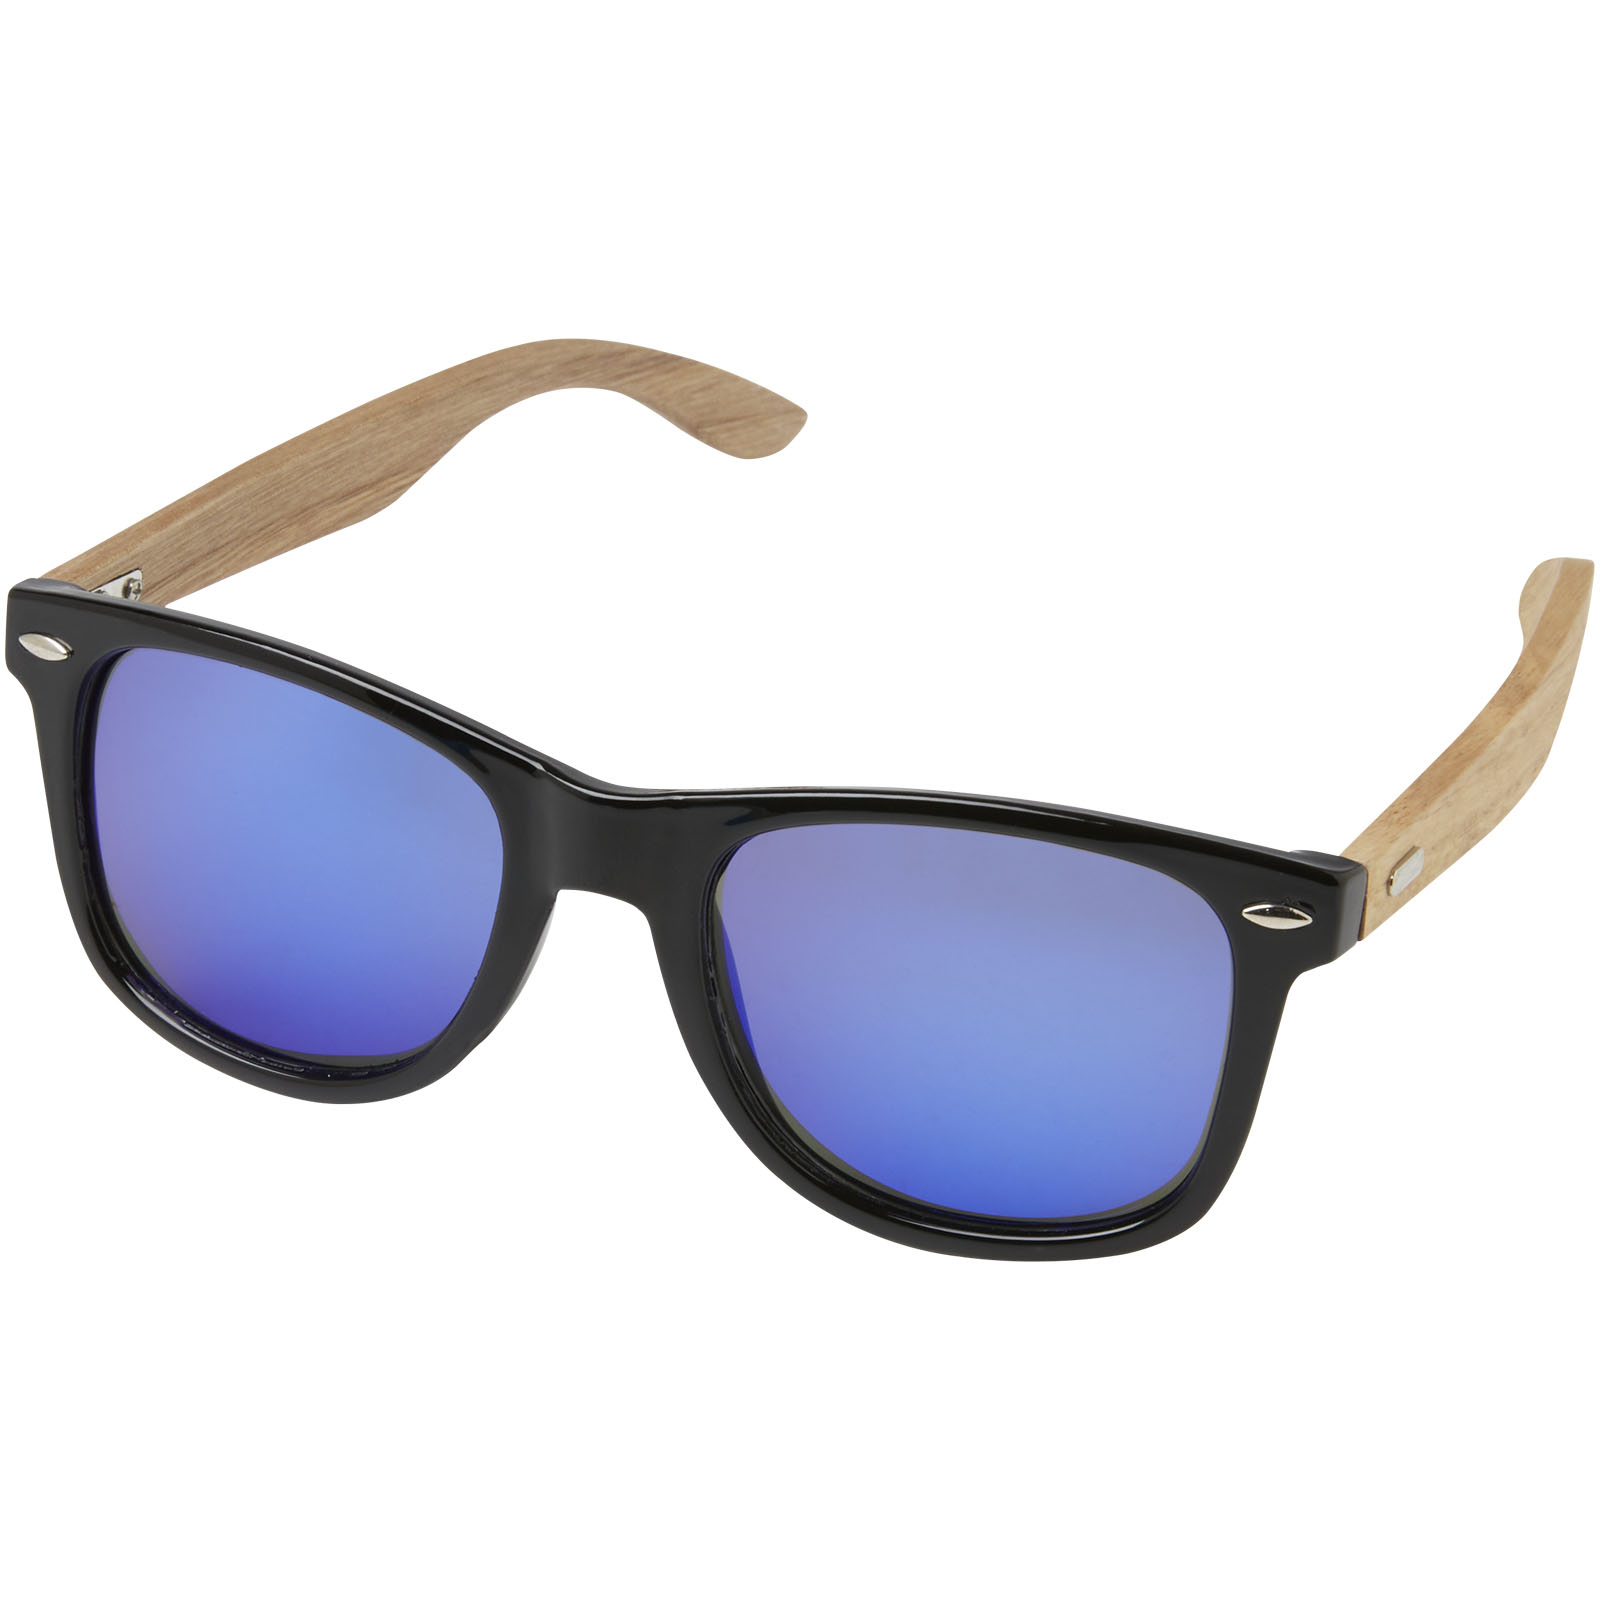 Advertising Sunglasses - Hiru rPET/wood mirrored polarized sunglasses in gift box - 0